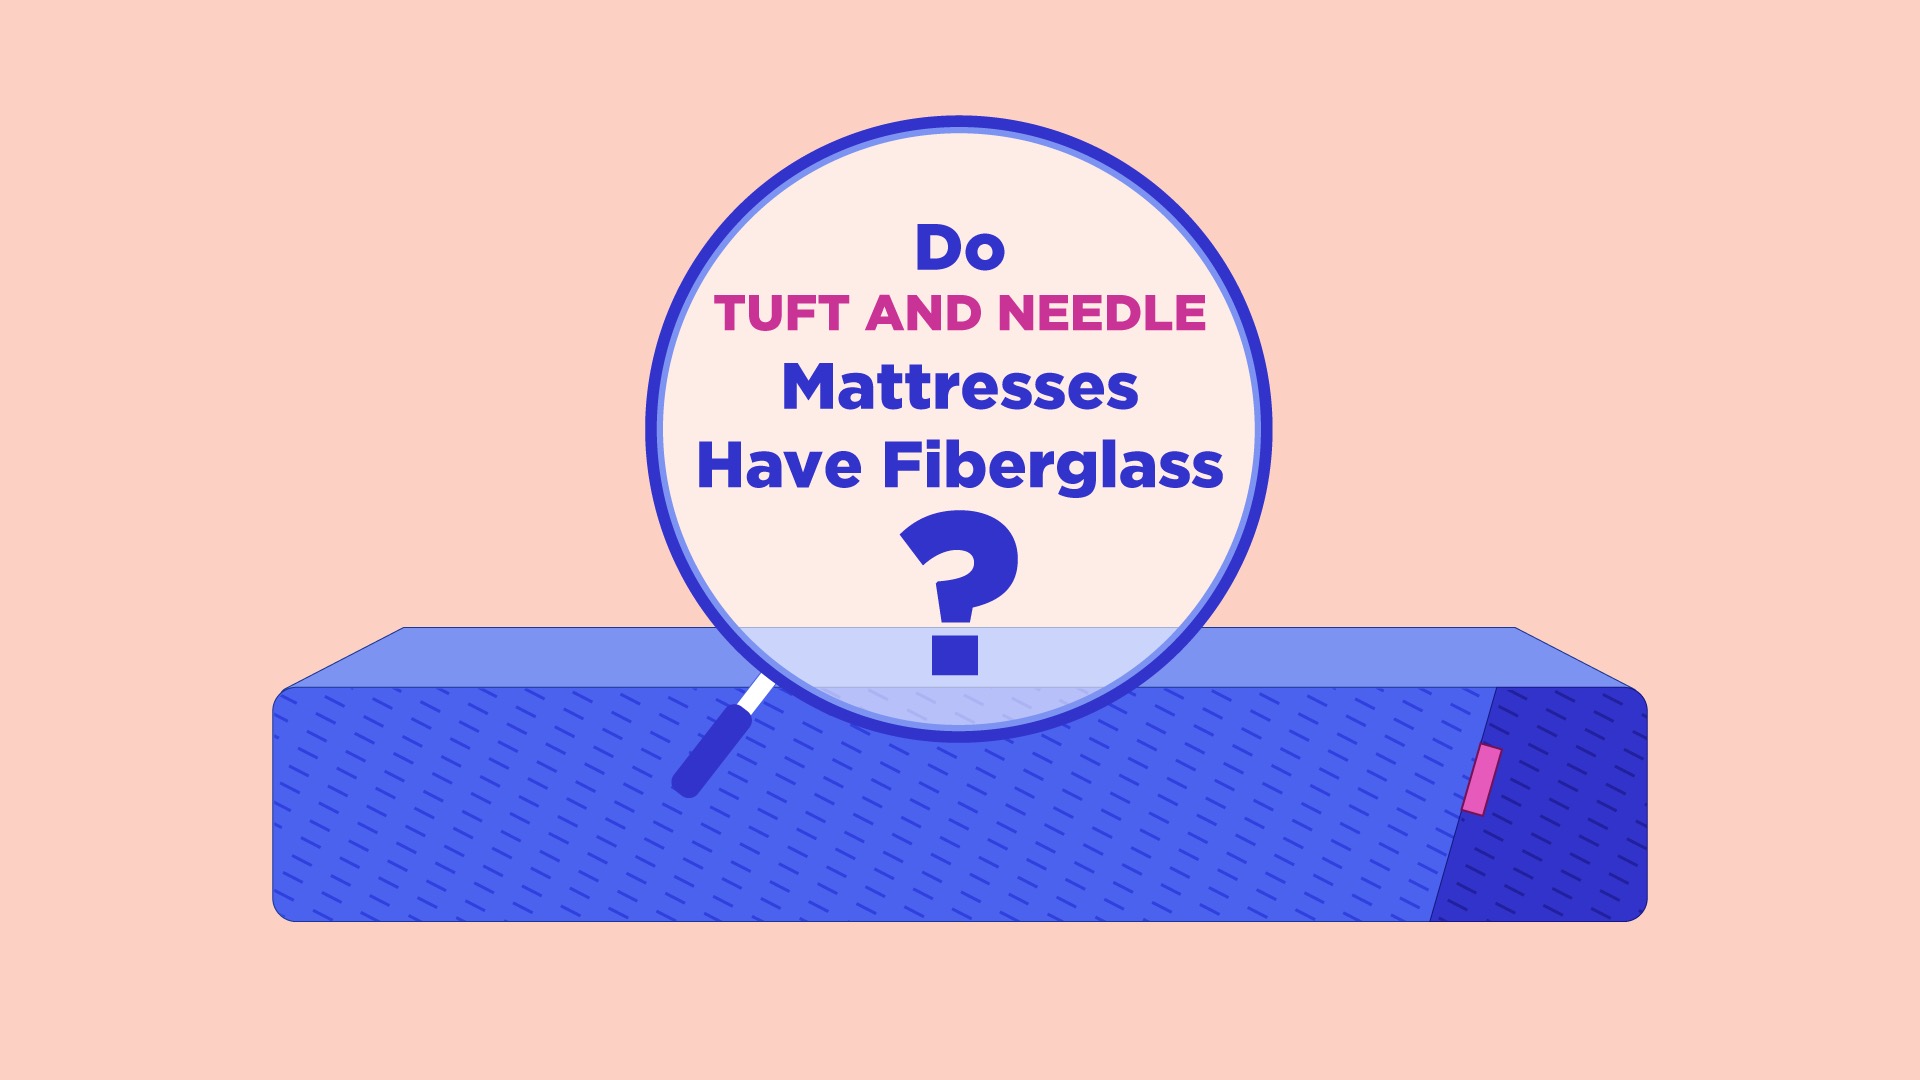 do purple mattresses offgas